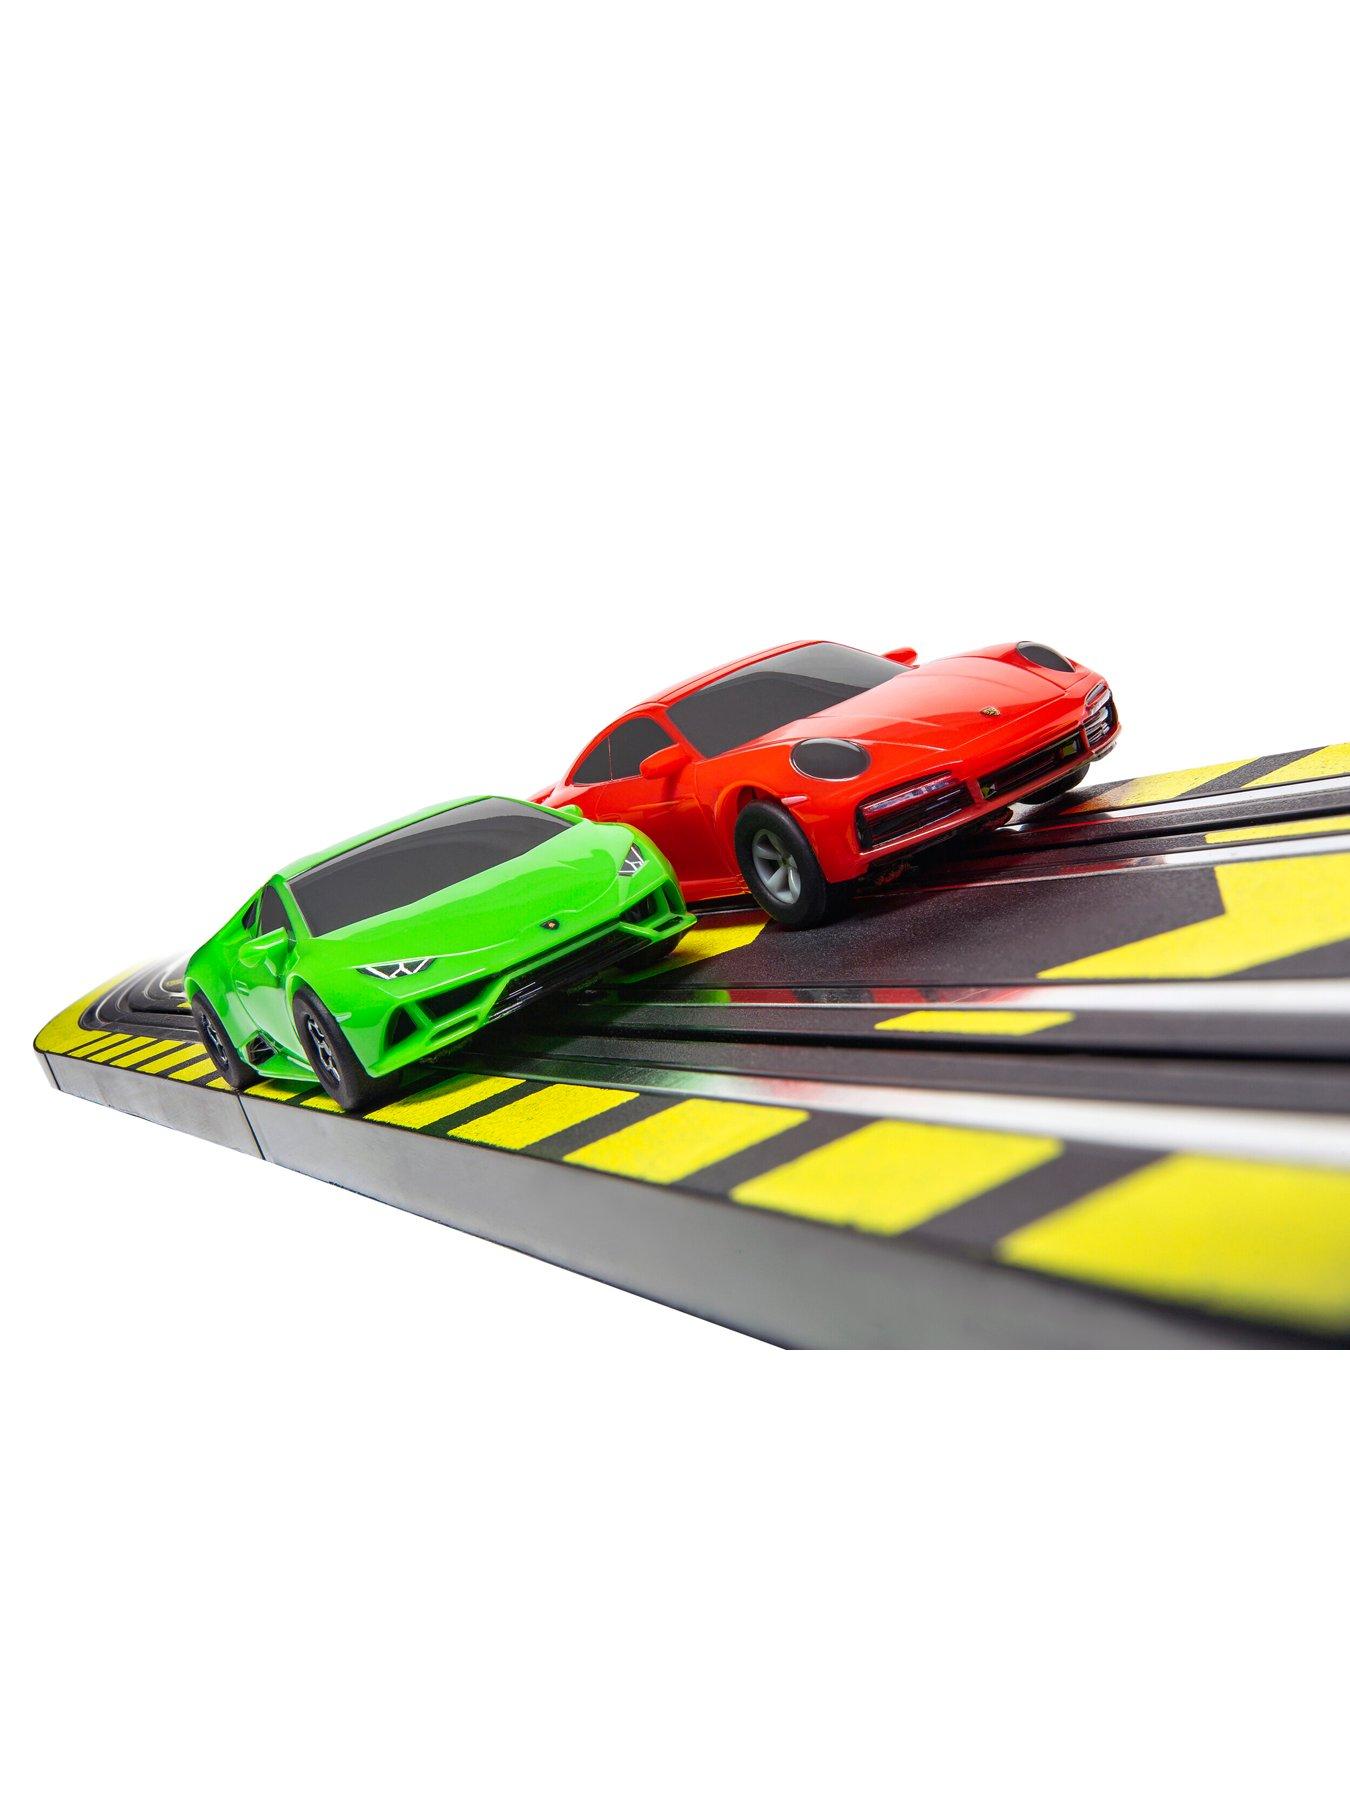 Super Speed Race Set - Lamborghini vs Porsche - Battery Powered Micro Set -  Scalextric G1178T